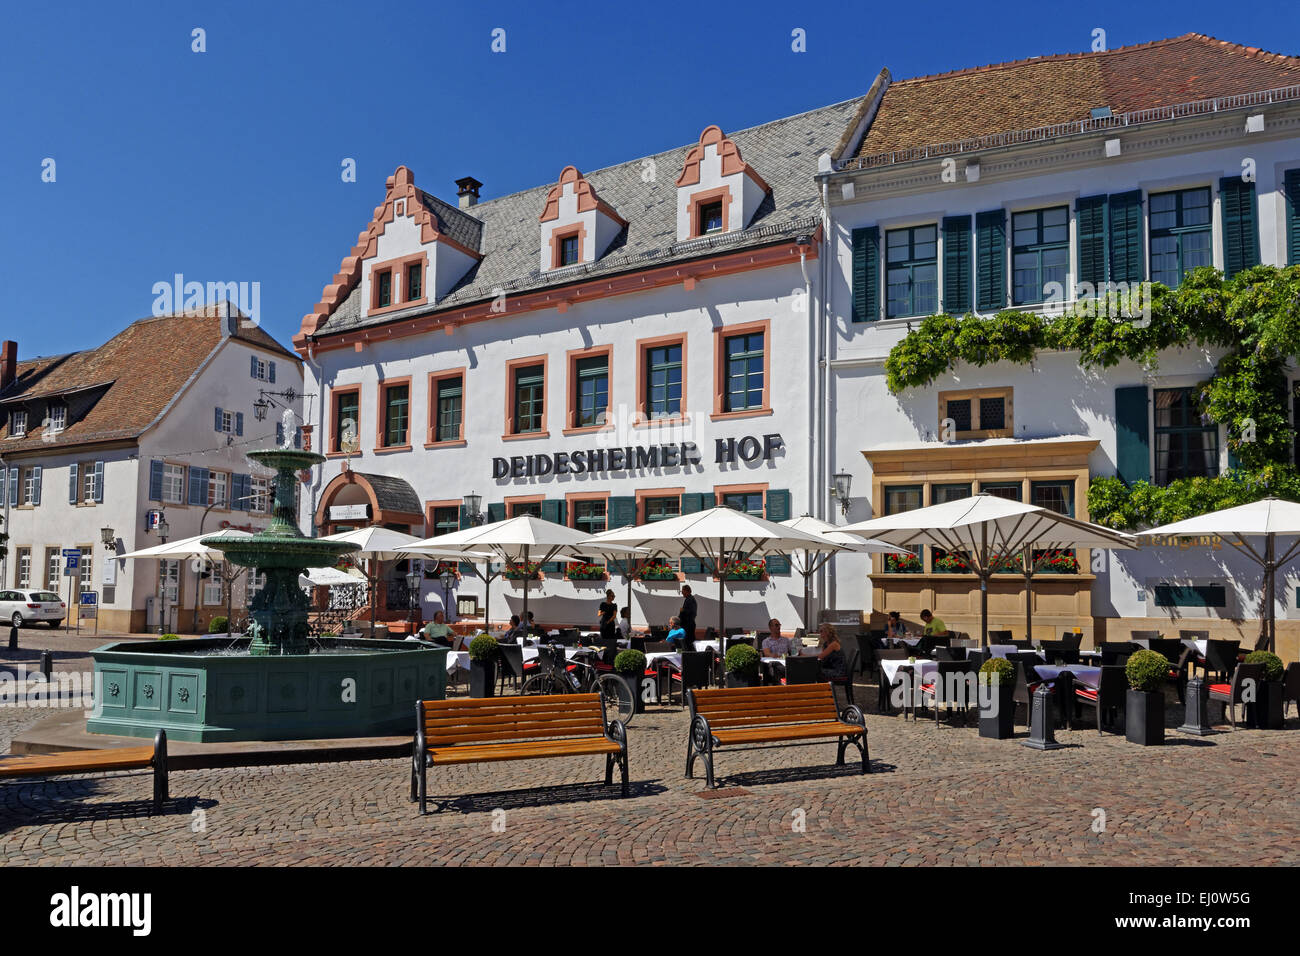 Europe, Germany, Europe, Rhineland-Palatinate, Deidesheim, marketplace, Andreas's well, Deidesheimer Hof, hotel, restaurant, arch Stock Photo